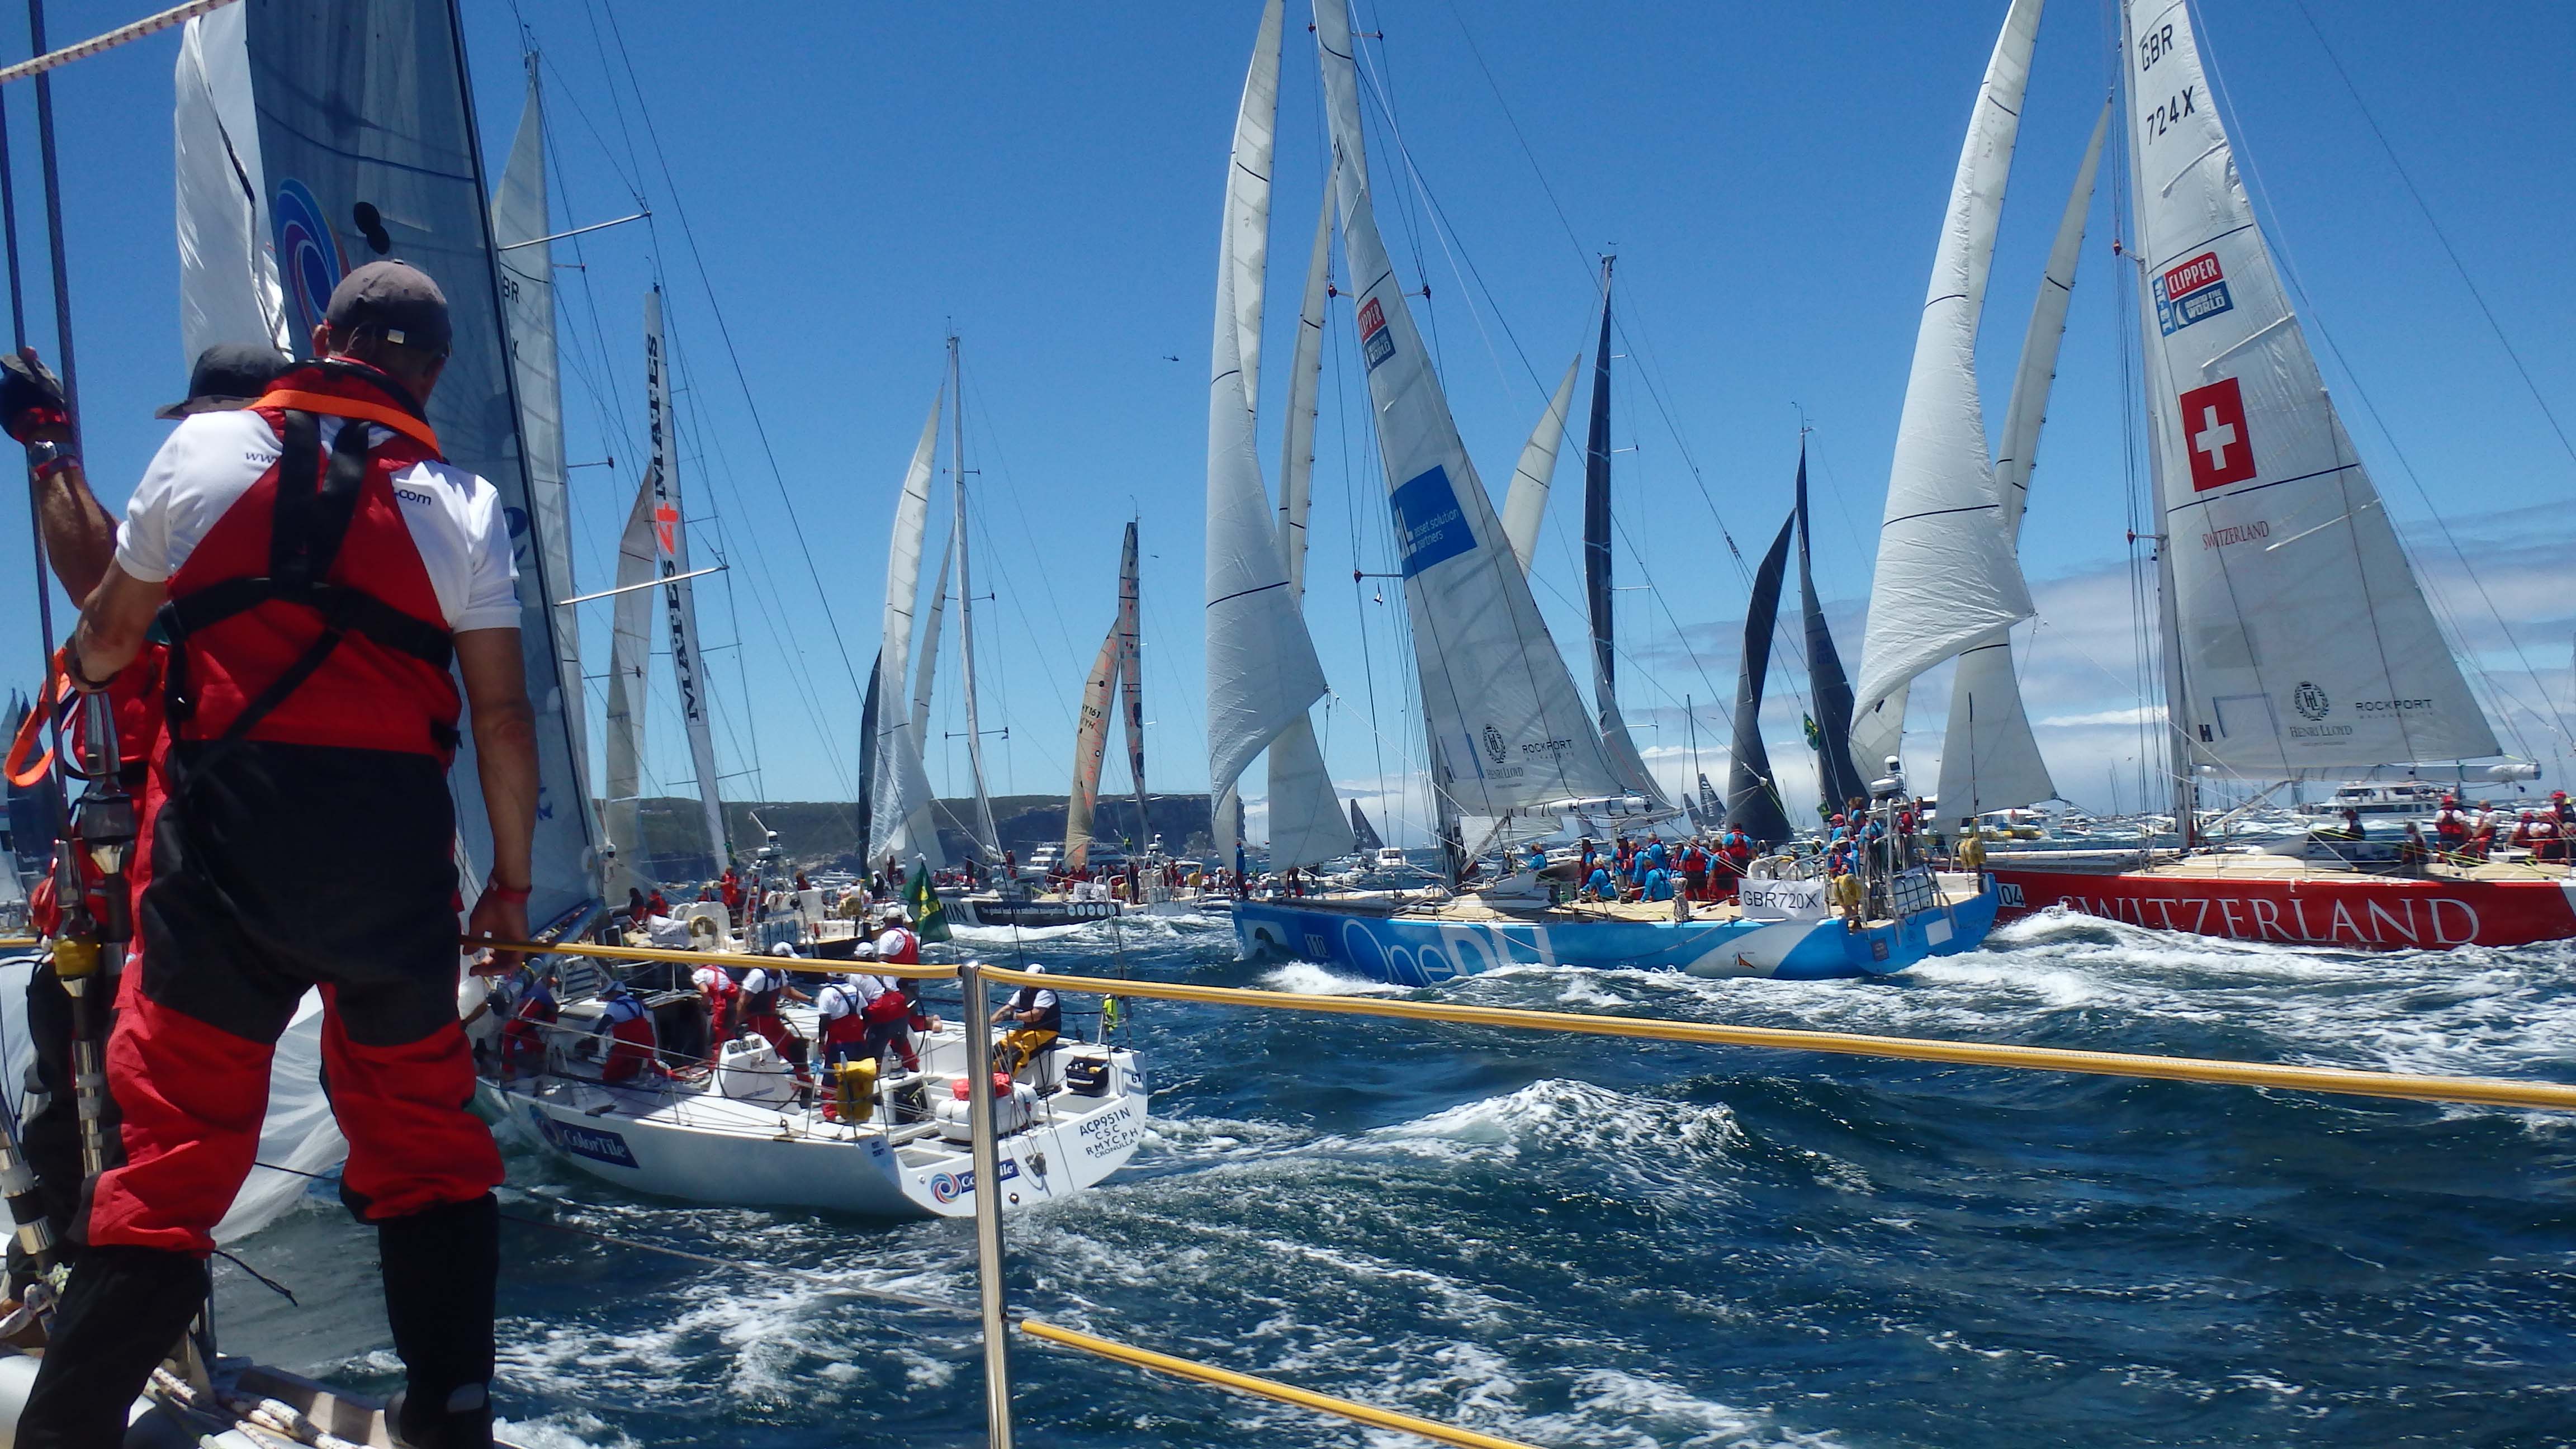 International Clipper Race sailors to bring colour to Rolex Sydney Hobart Yacht Race again